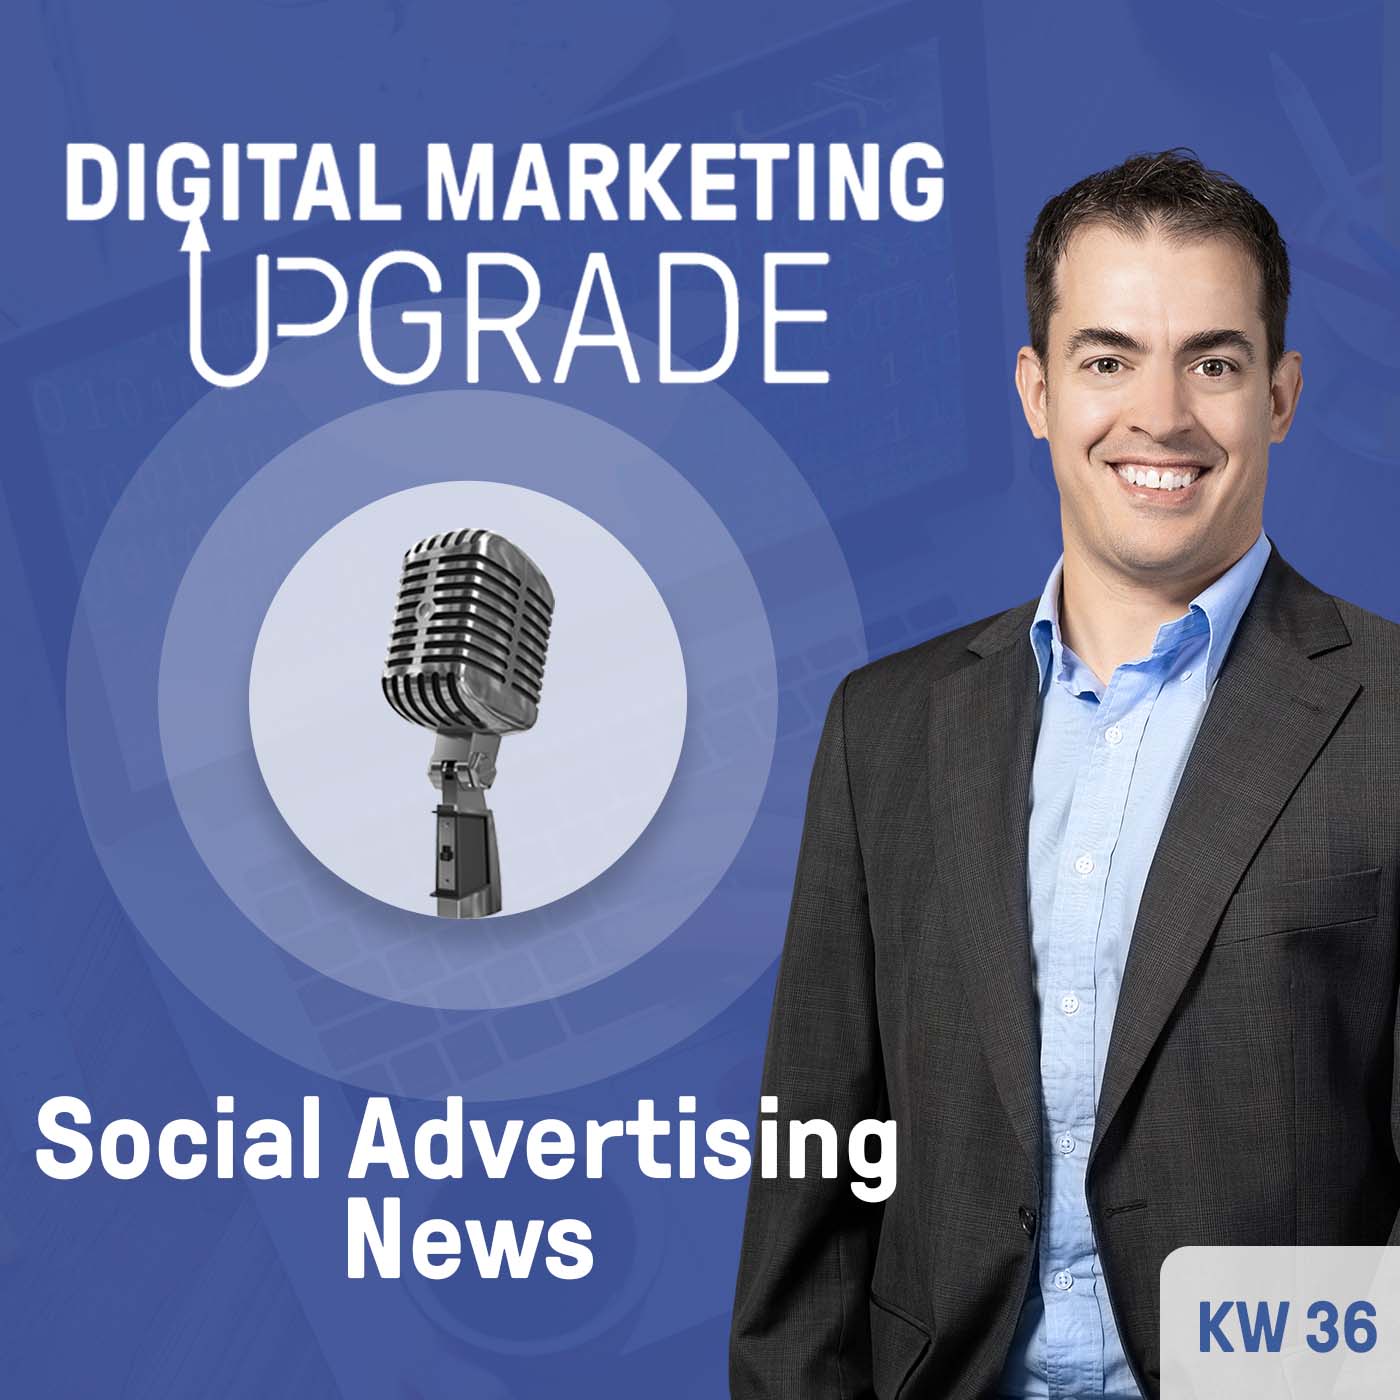 Social Advertising News - KW 36/23